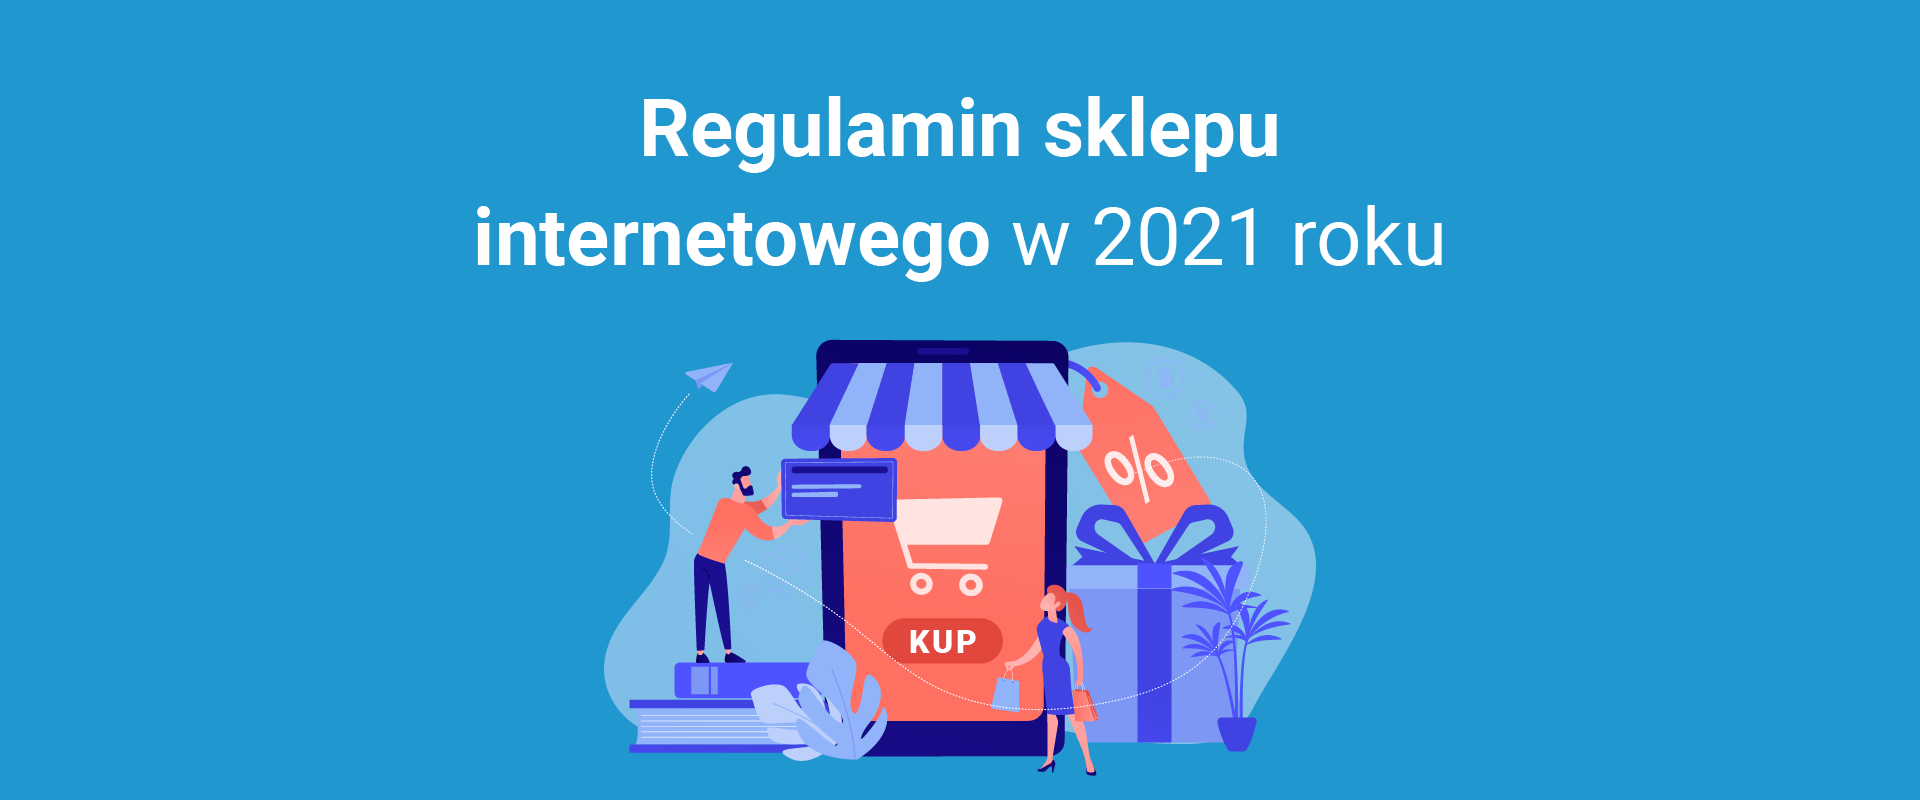 Regulamin sklepu internetowego w 2021 roku